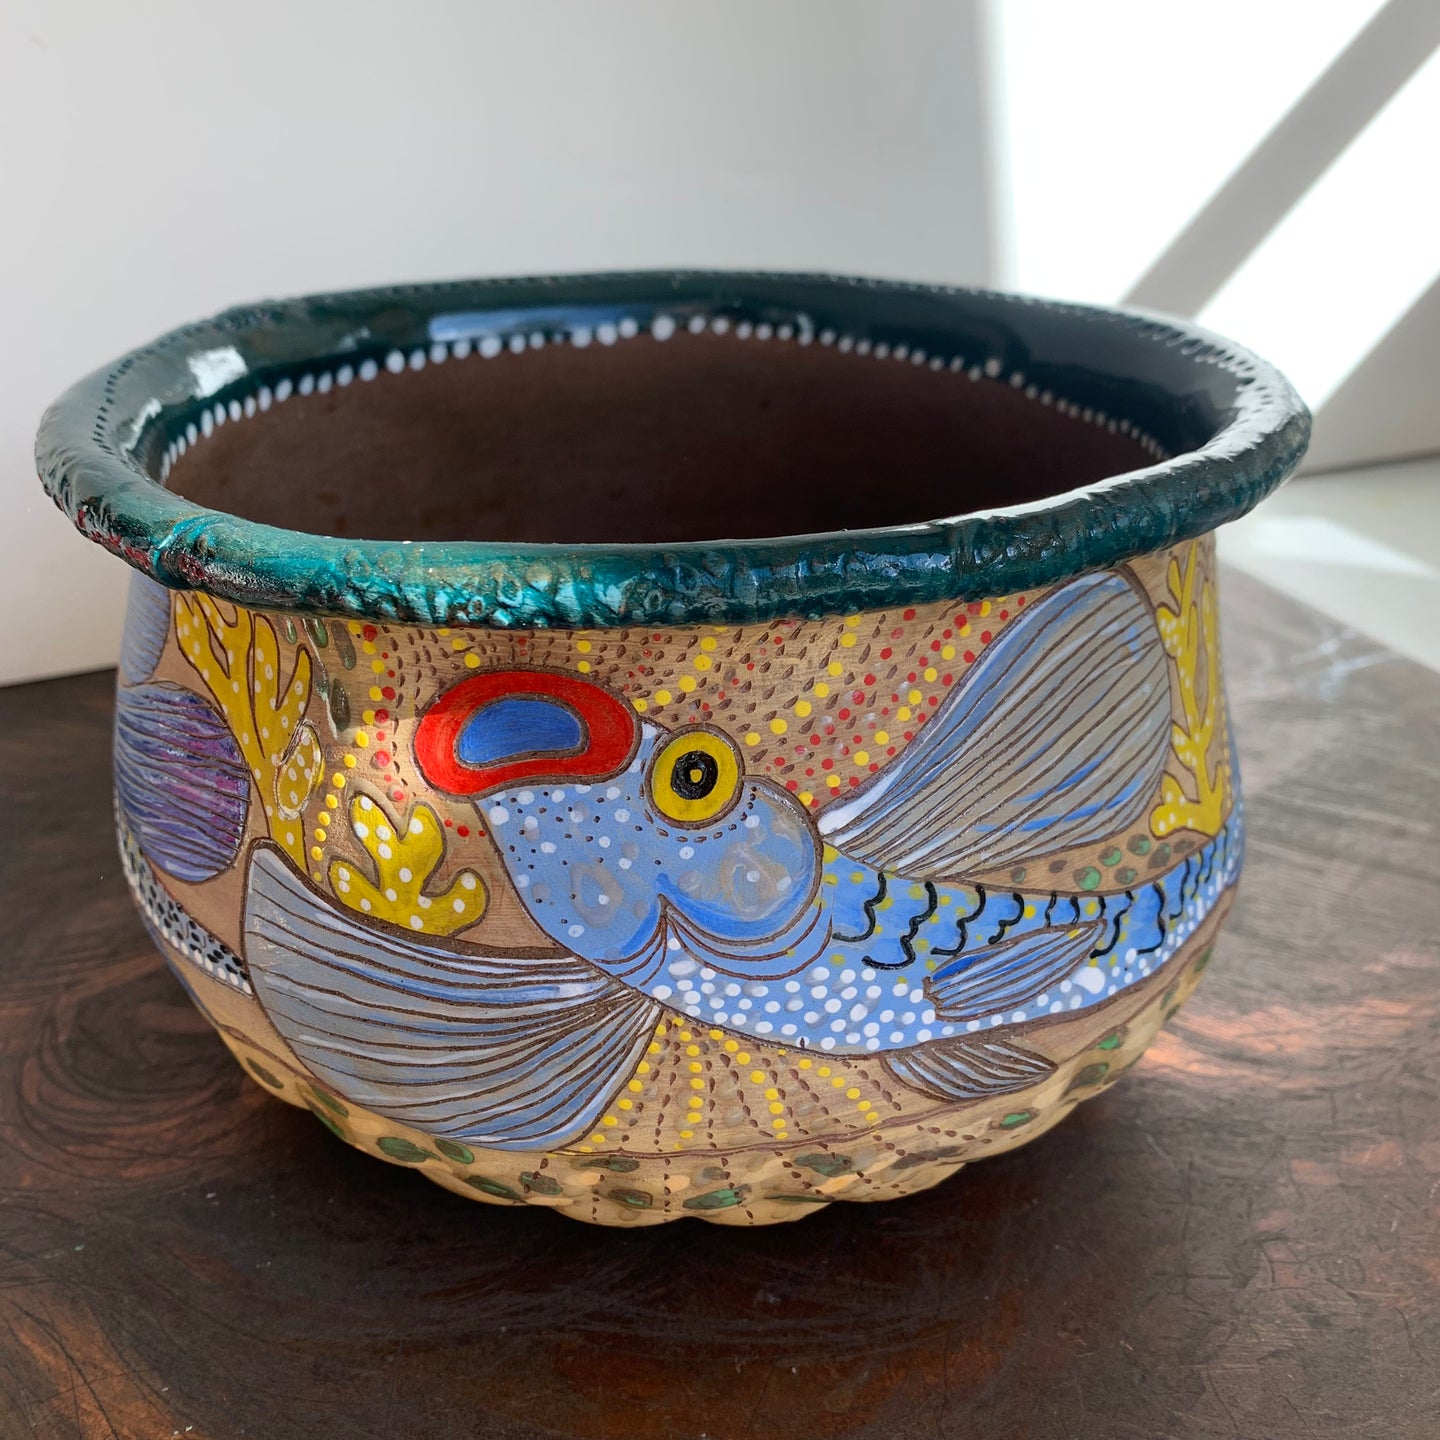 Fish bowl or vase